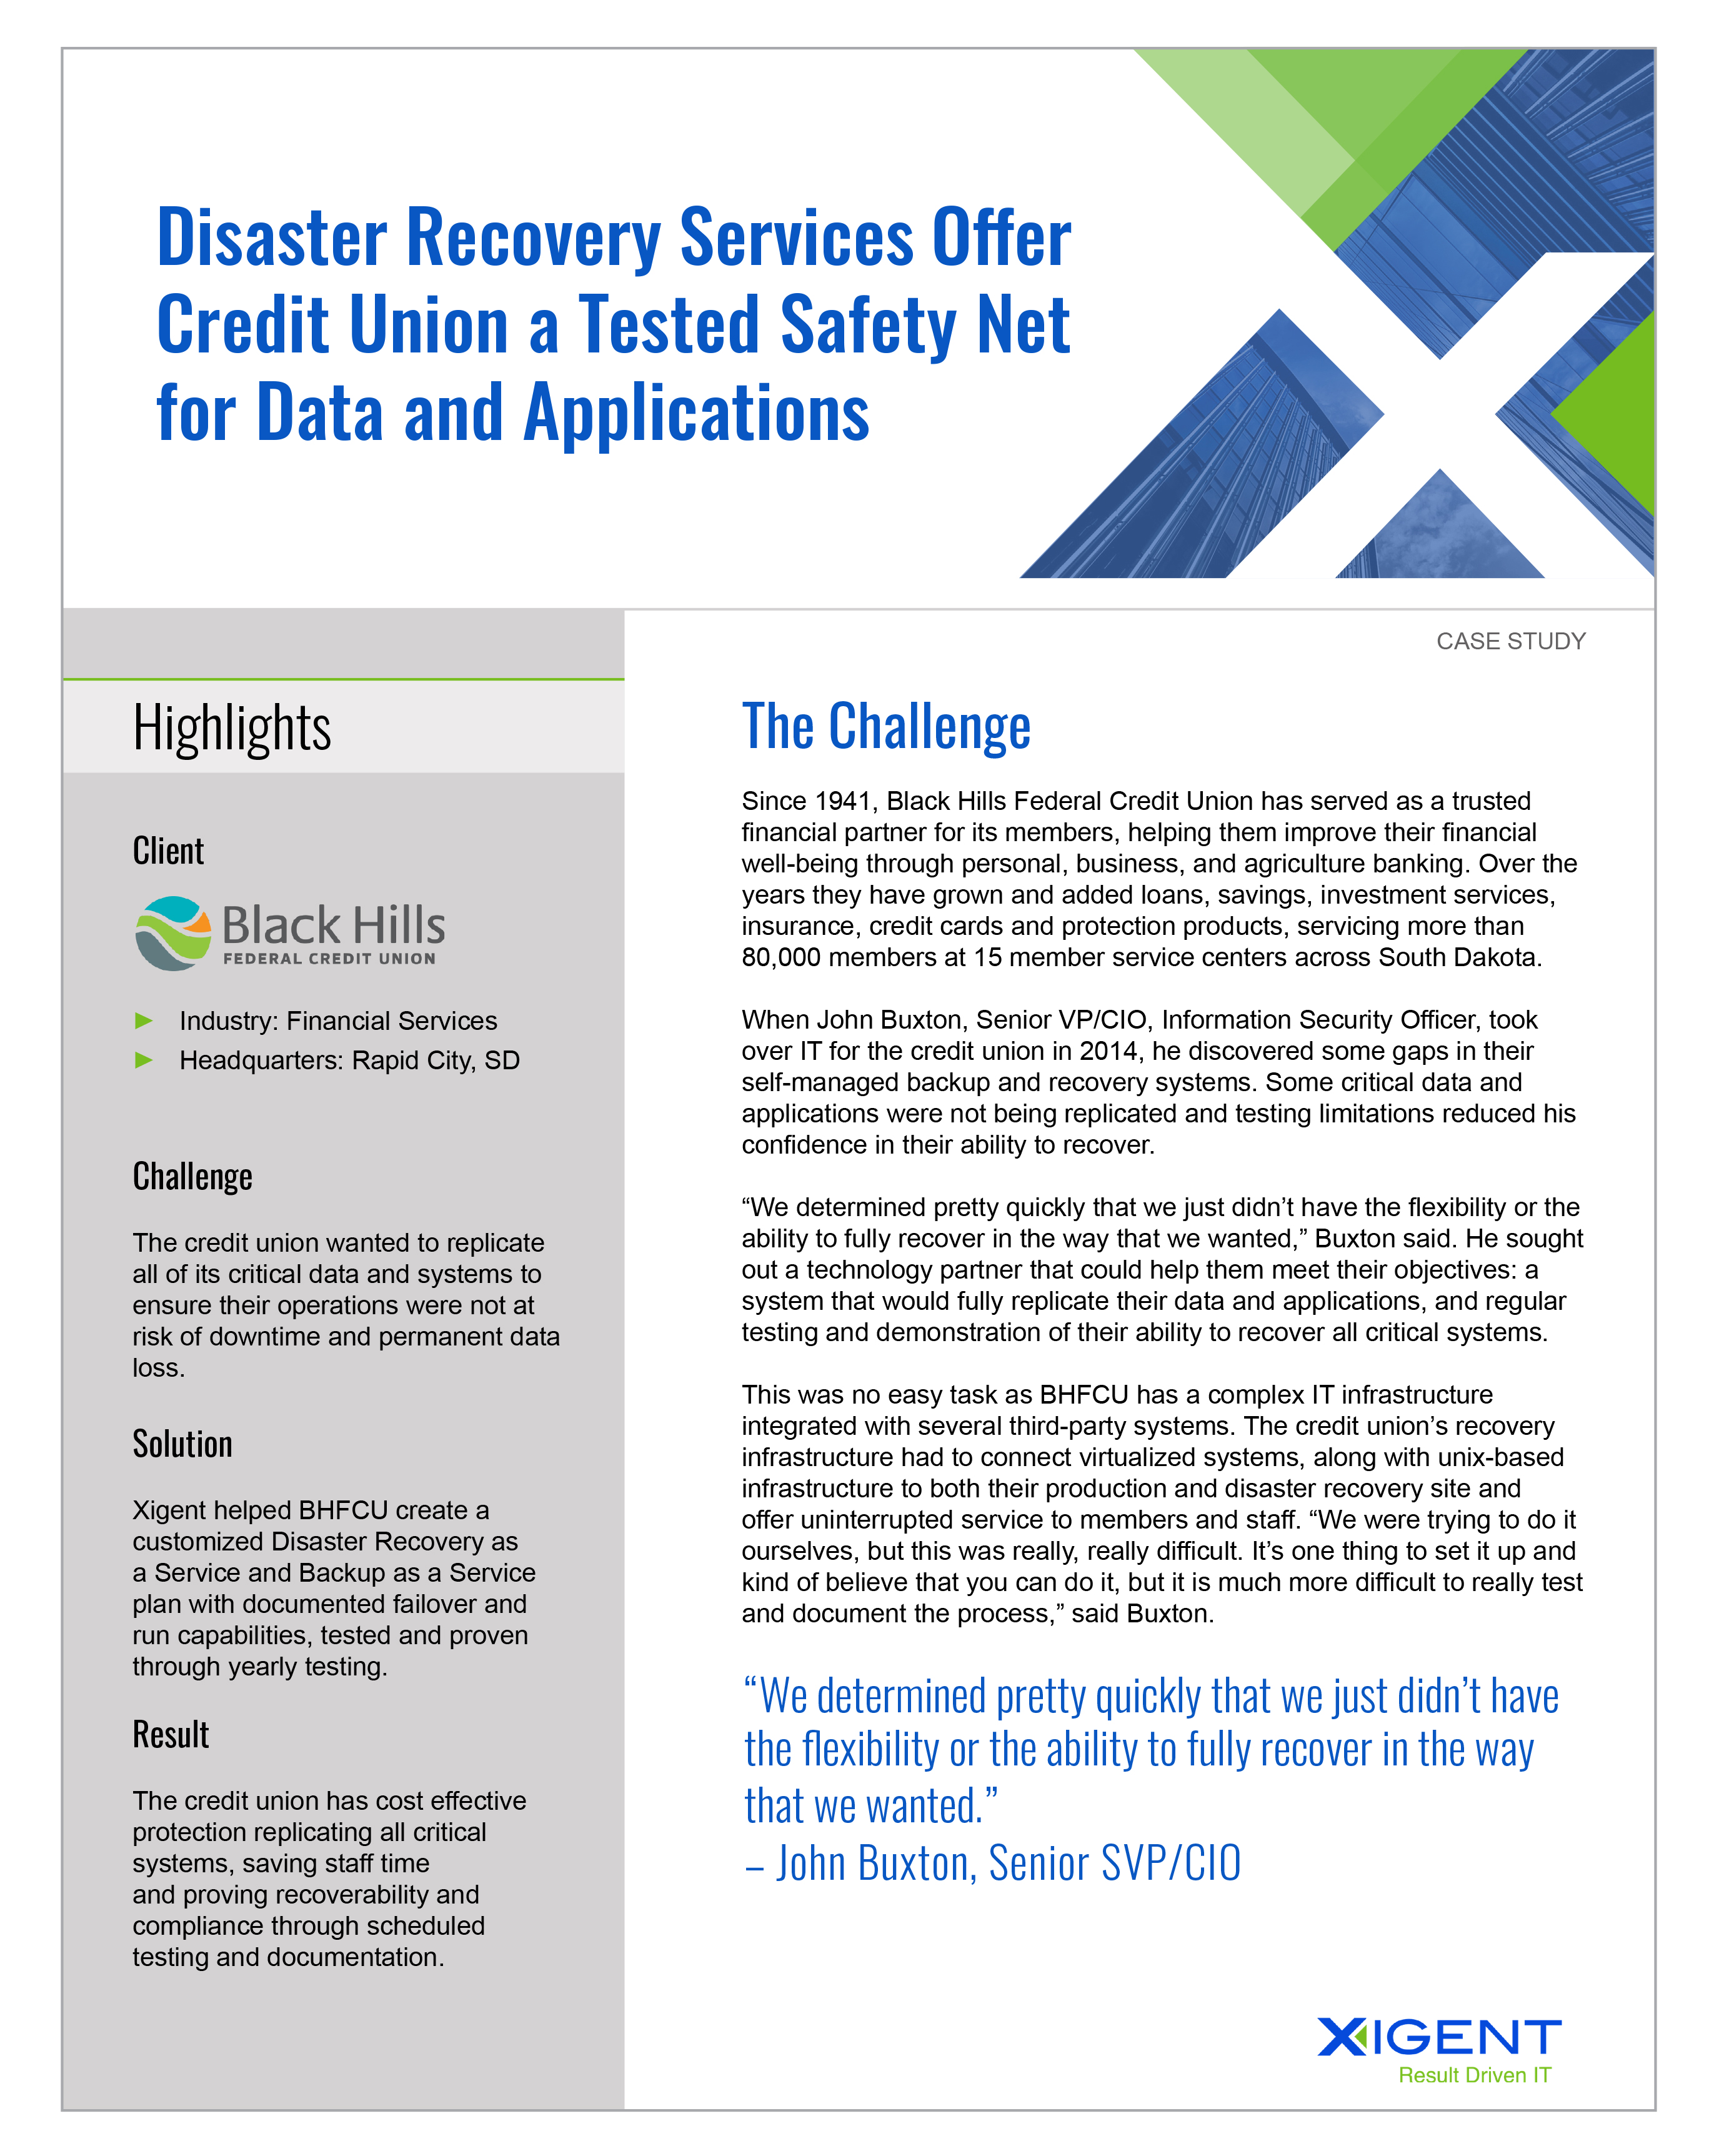 Xigent Credit Union DRaaS Case Study Thumbnail